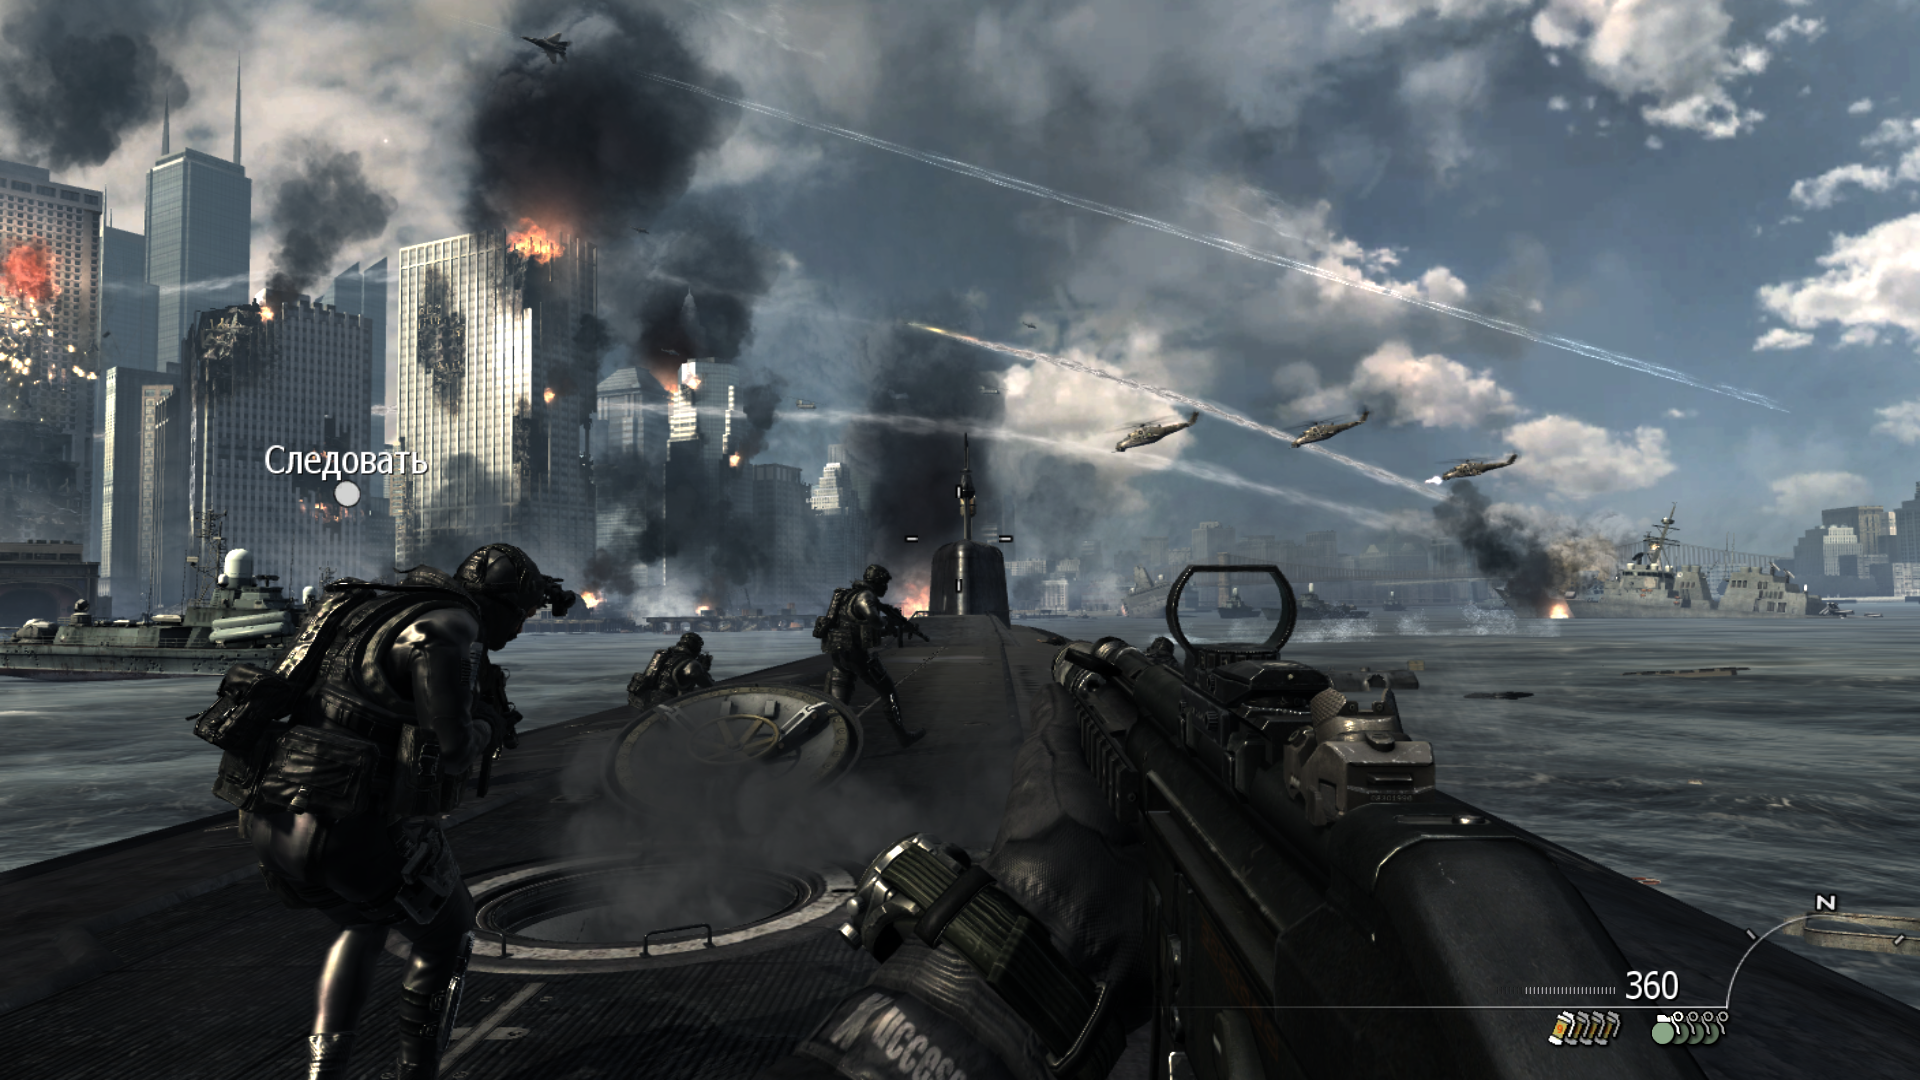 Cool of duty. Call of Duty: Modern Warfare 3. Call of Duty Modern варфаер 3. Call of Duty 8 Modern Warfare 3. Call of Duty Modern Warfare 3 2011.